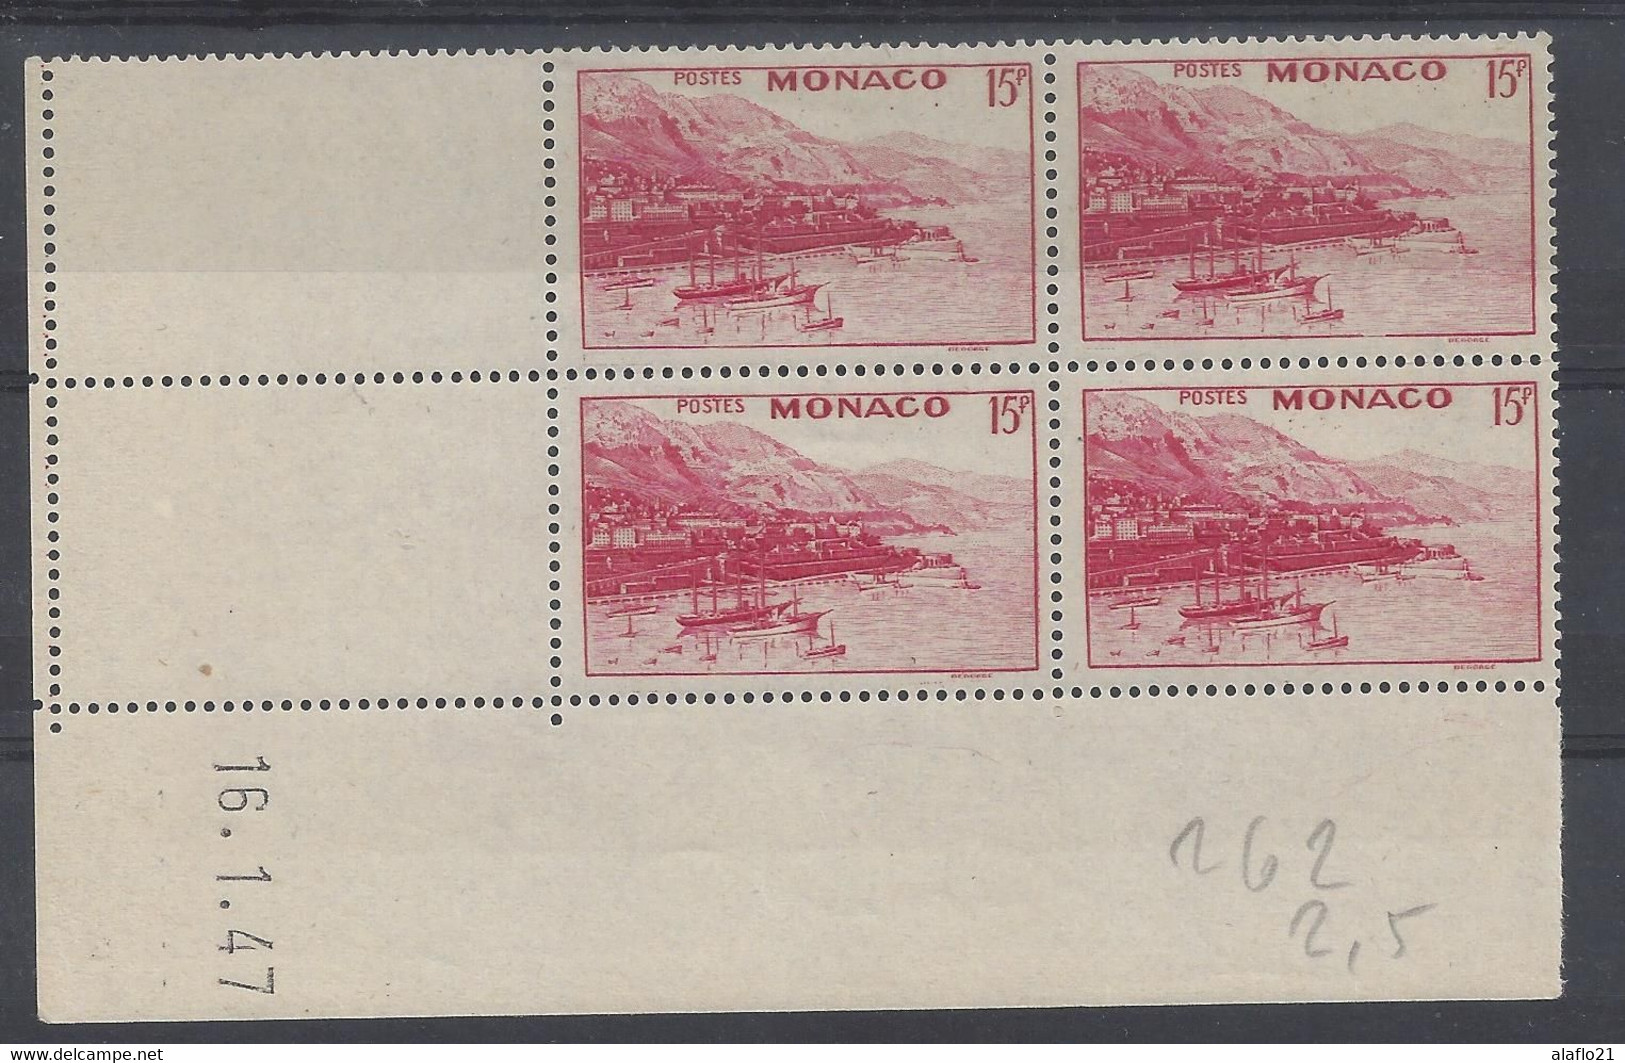 MONACO - N° 262 - Bloc De 4 COIN DATE - NEUF SANS CHARNIERE - 16/1/47 - Unused Stamps